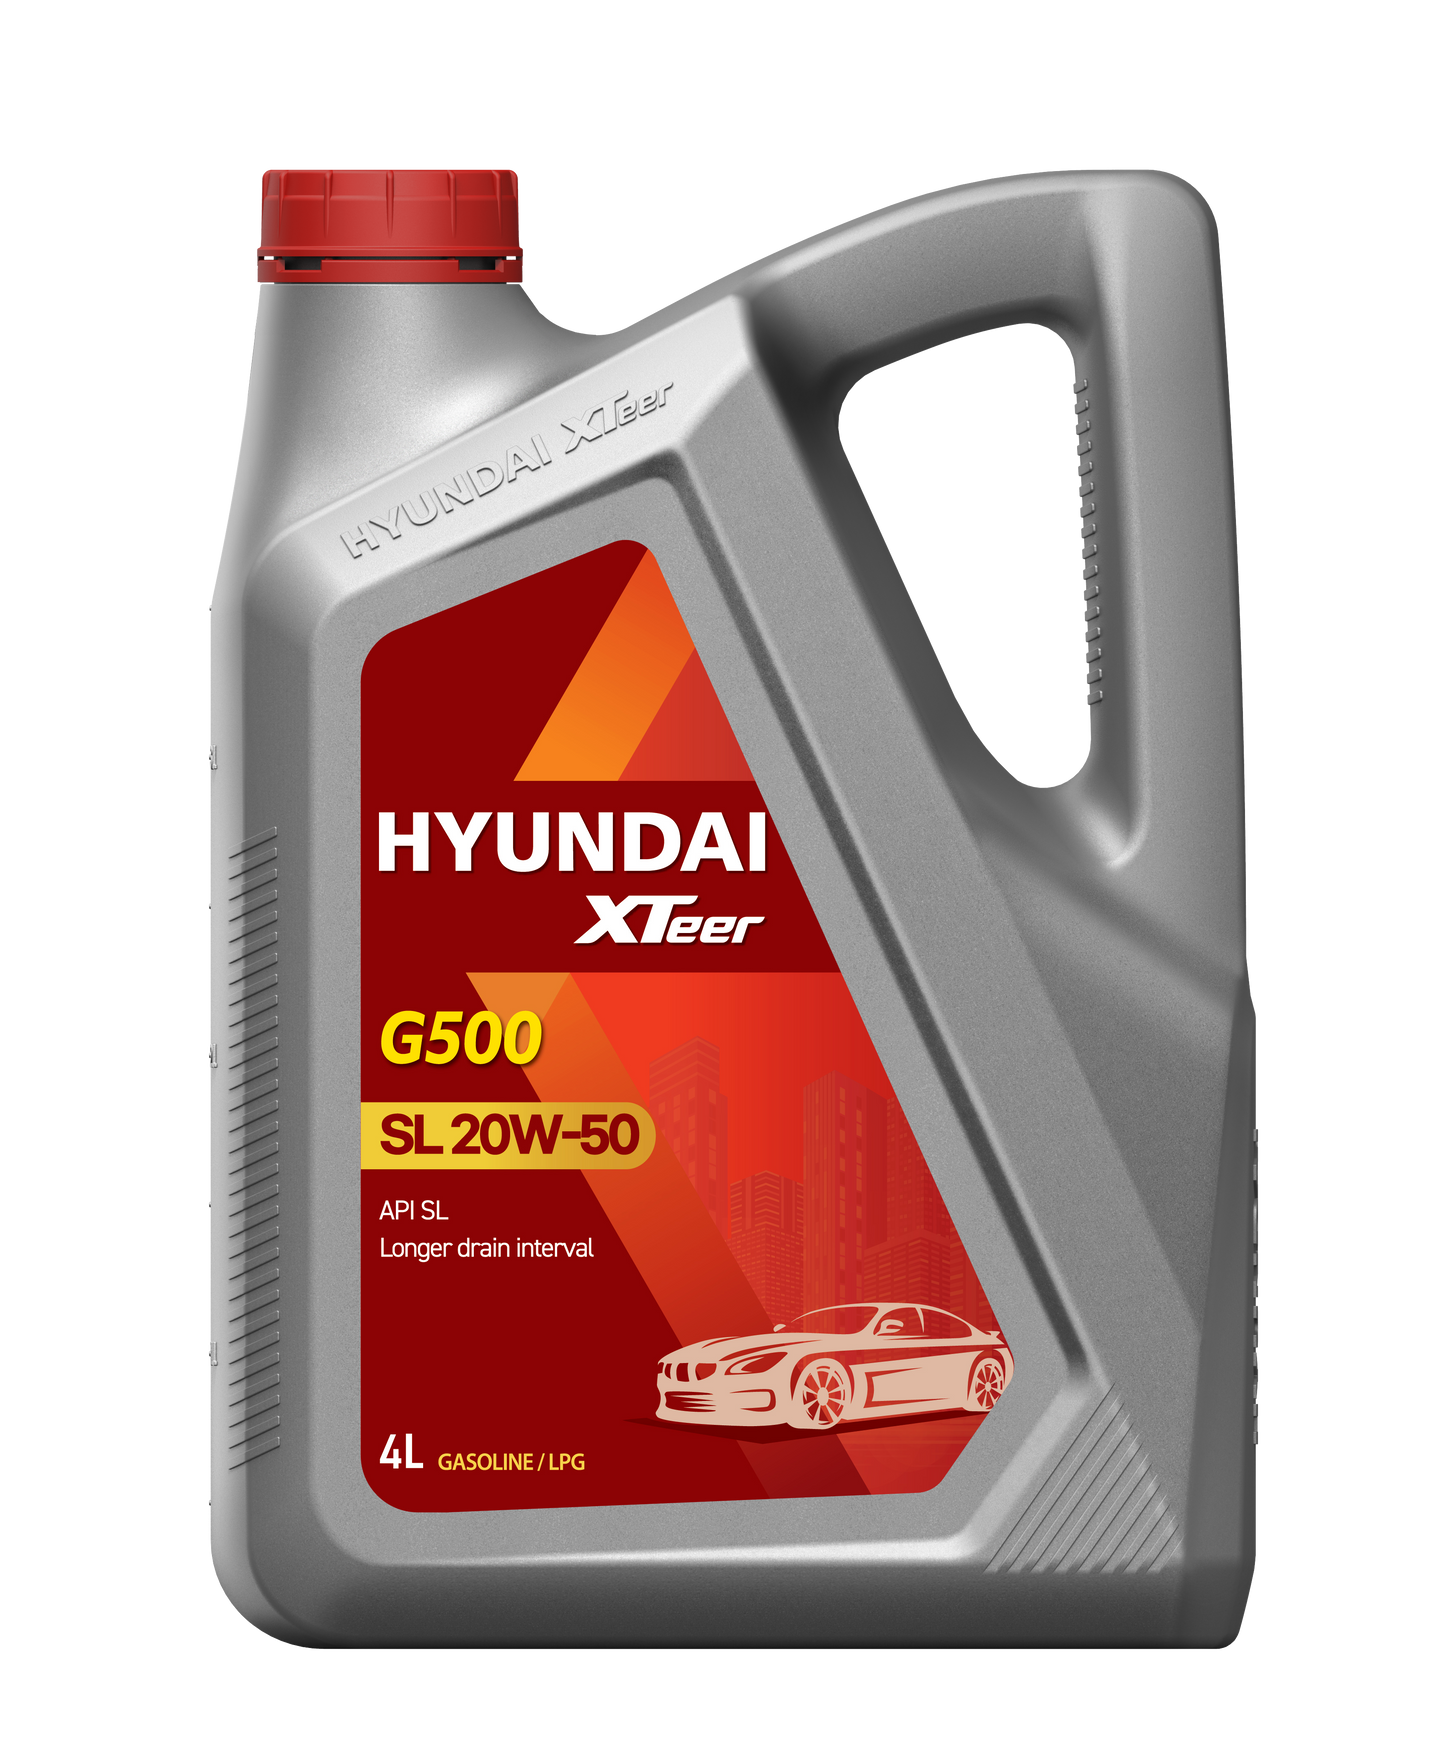 HYUNDIA XTeer Gasoline G500 API SL 1L/4L/5L/200L ENGINE OIL FOR PETROL ENGINE